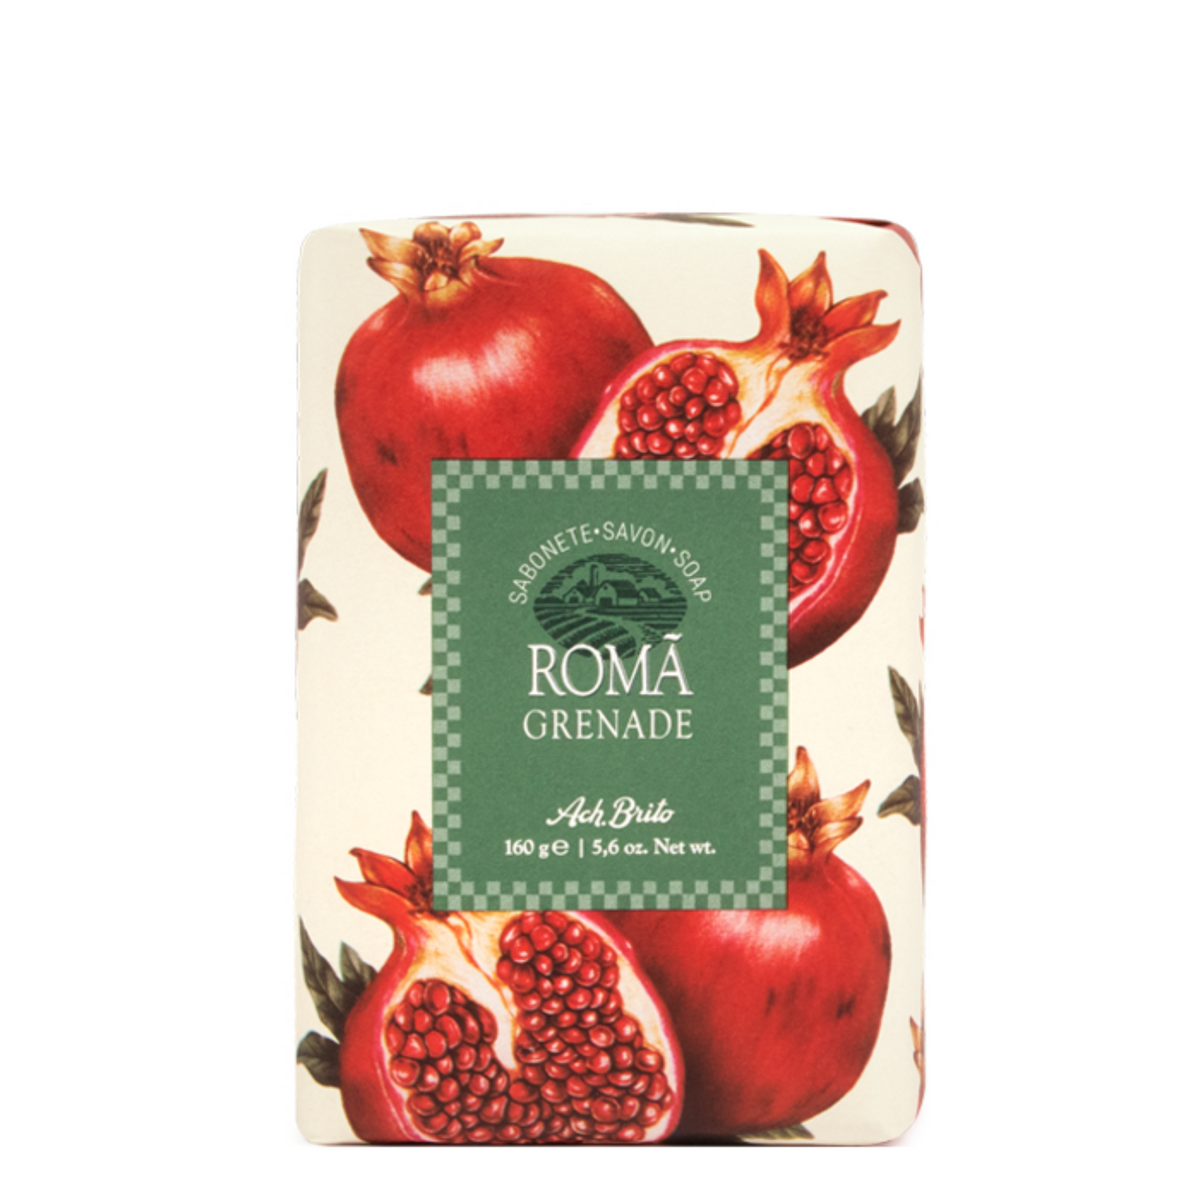 Primary Image of Pomegranate (Roma) Bar Soap